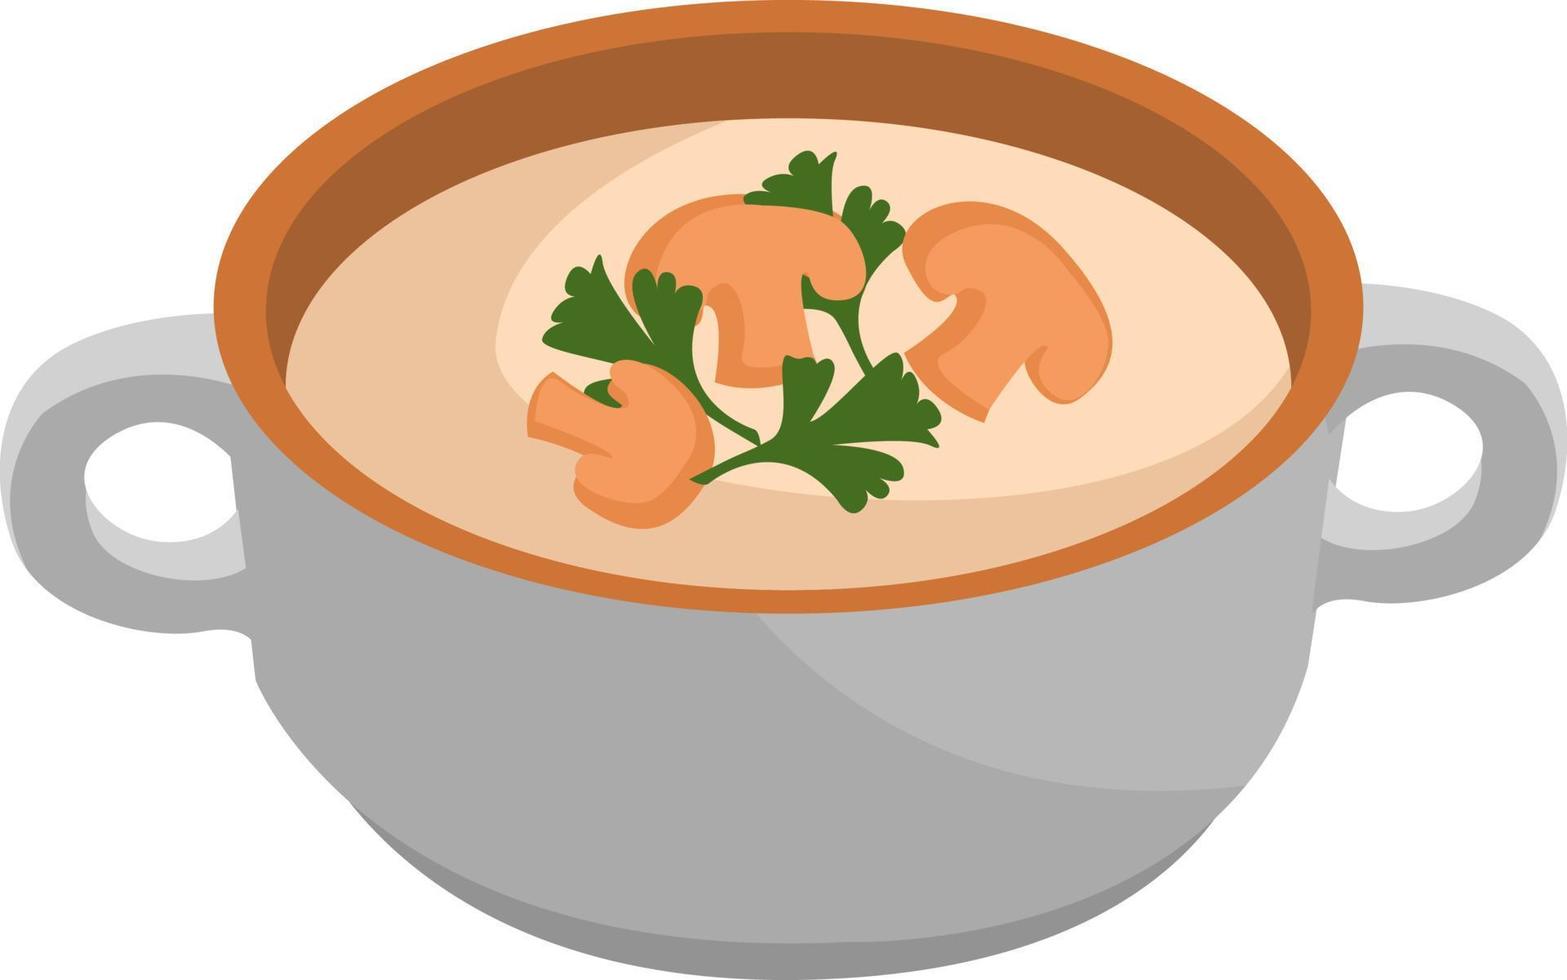 Mushroom soup, illustration, vector on white background